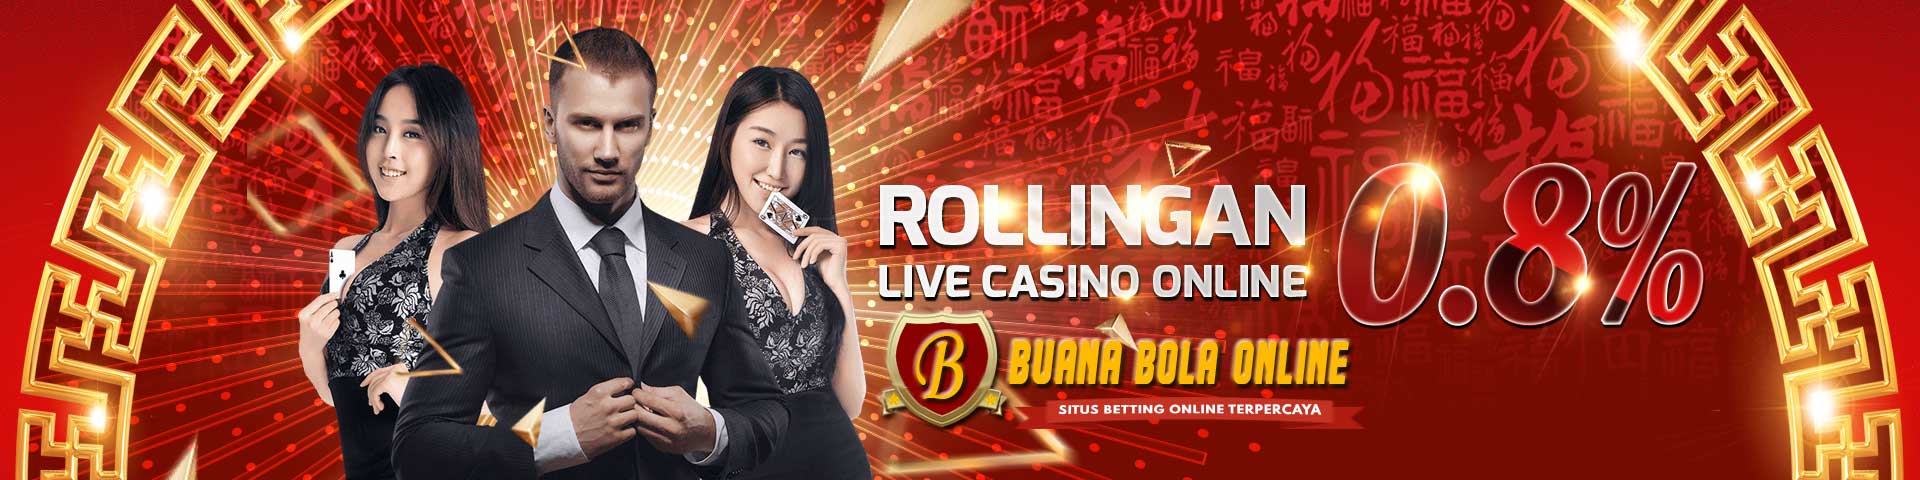 rollingan Casino